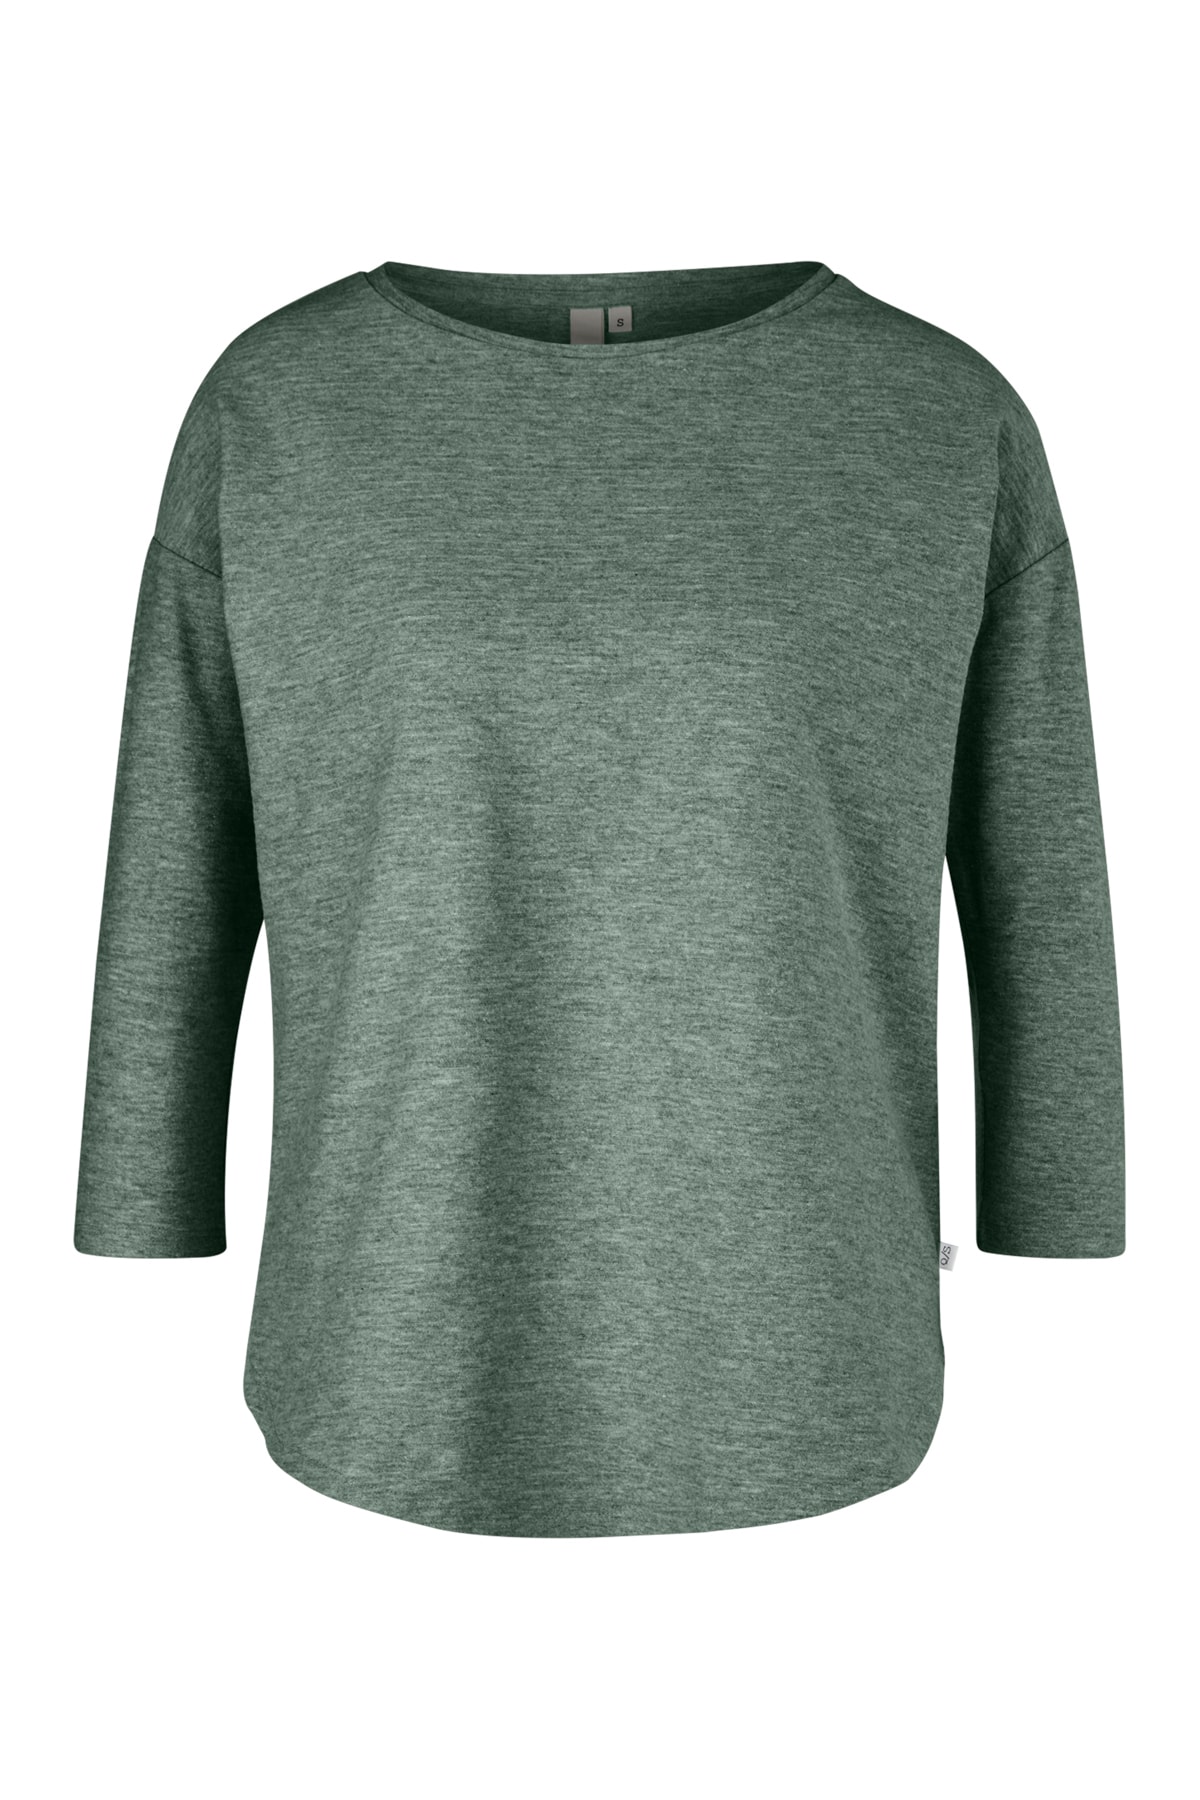 QS by s.Oliver T-Shirt Khaki Regular Fit